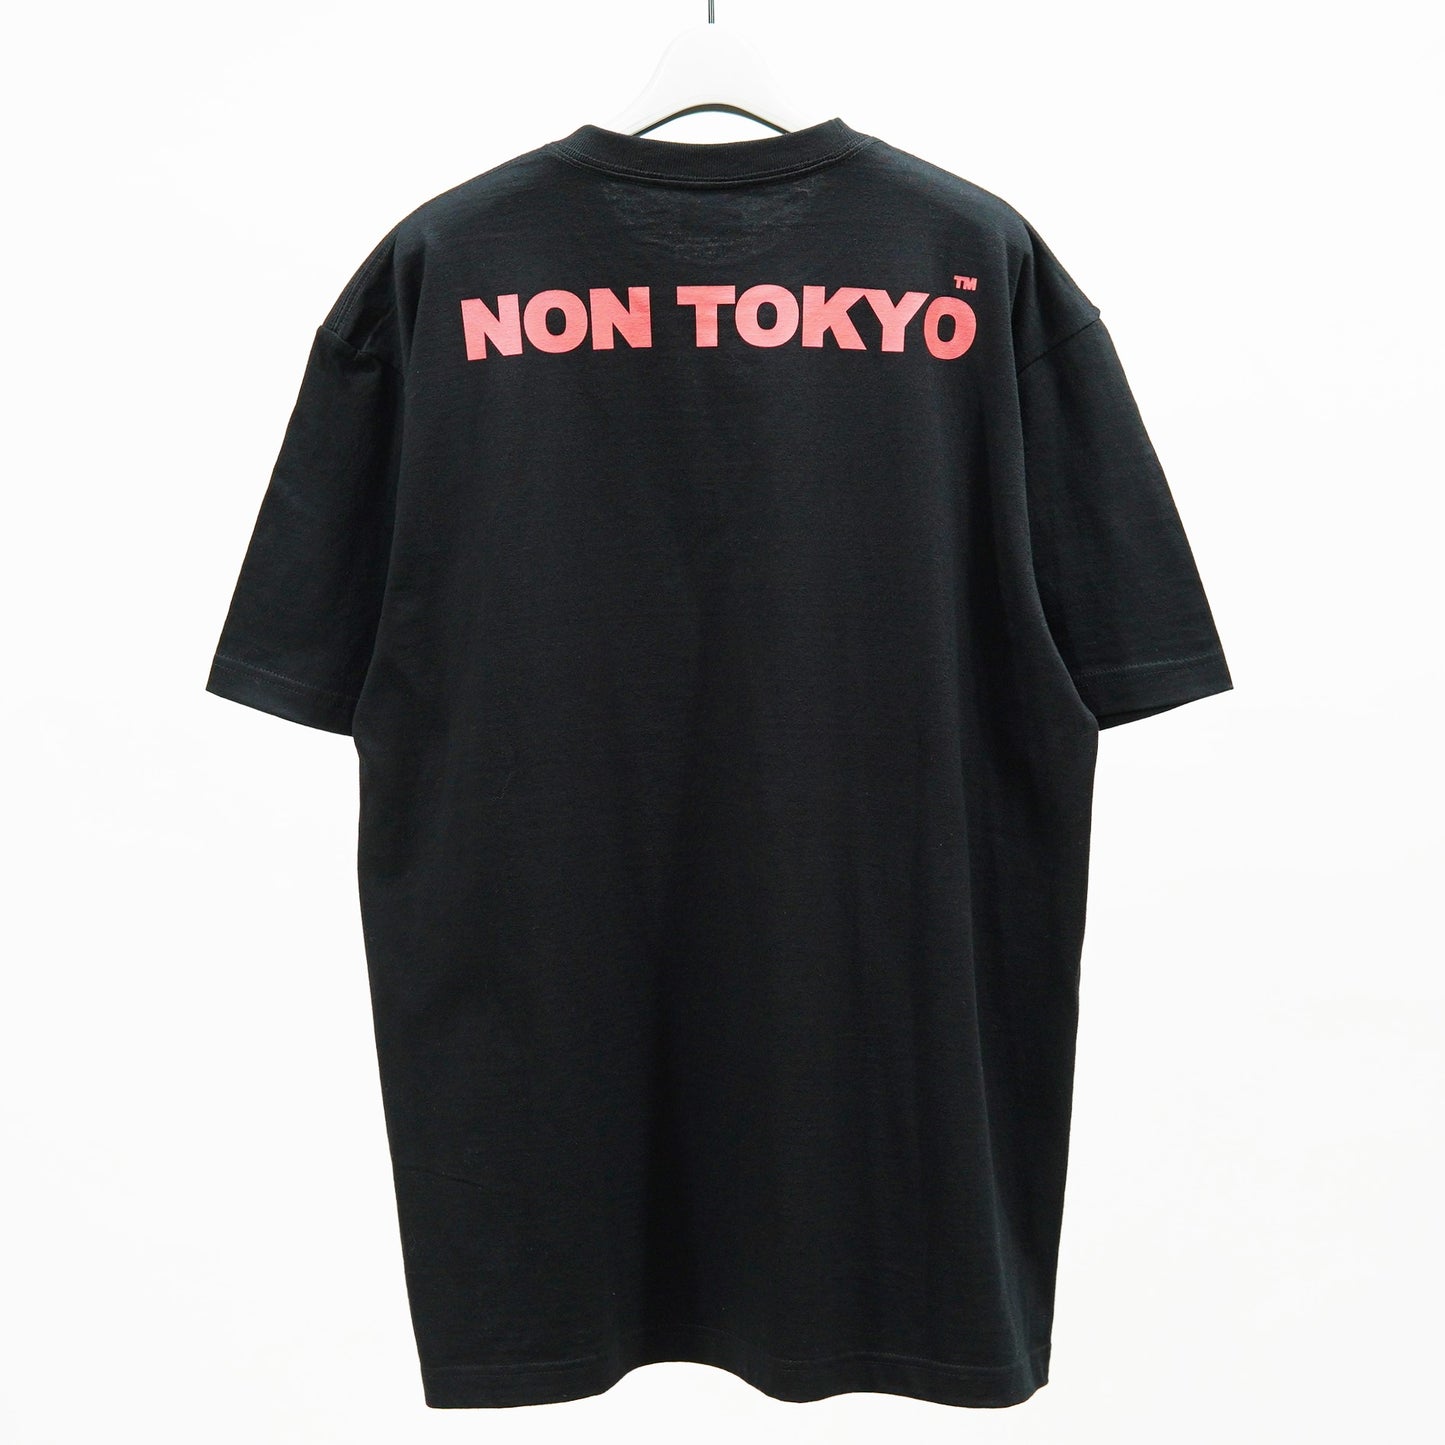 NON TOKYO / PRINT T-SHIRT(For you / BLACK) / 〈ノントーキョー〉プリントTシャツ (フォーユー / ブラック)